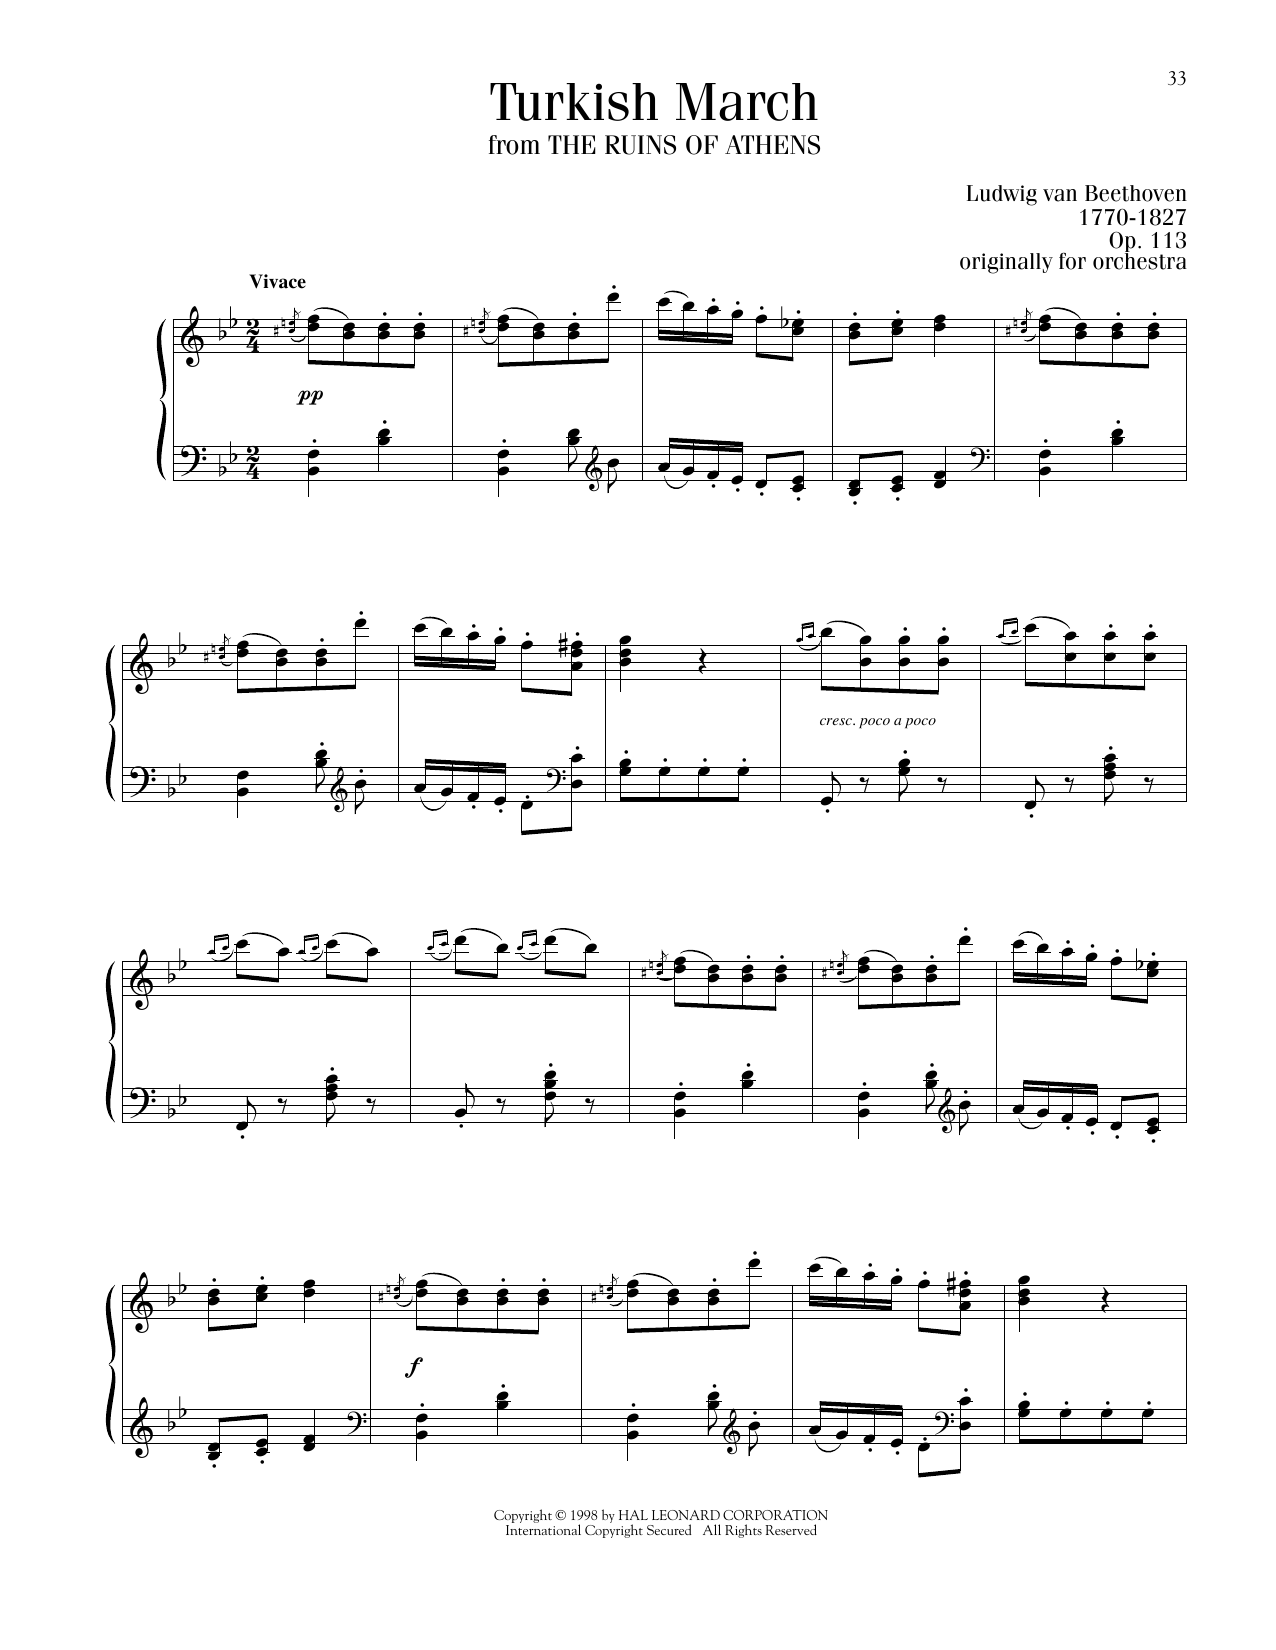 Ludwig van Beethoven Turkish March sheet music notes printable PDF score